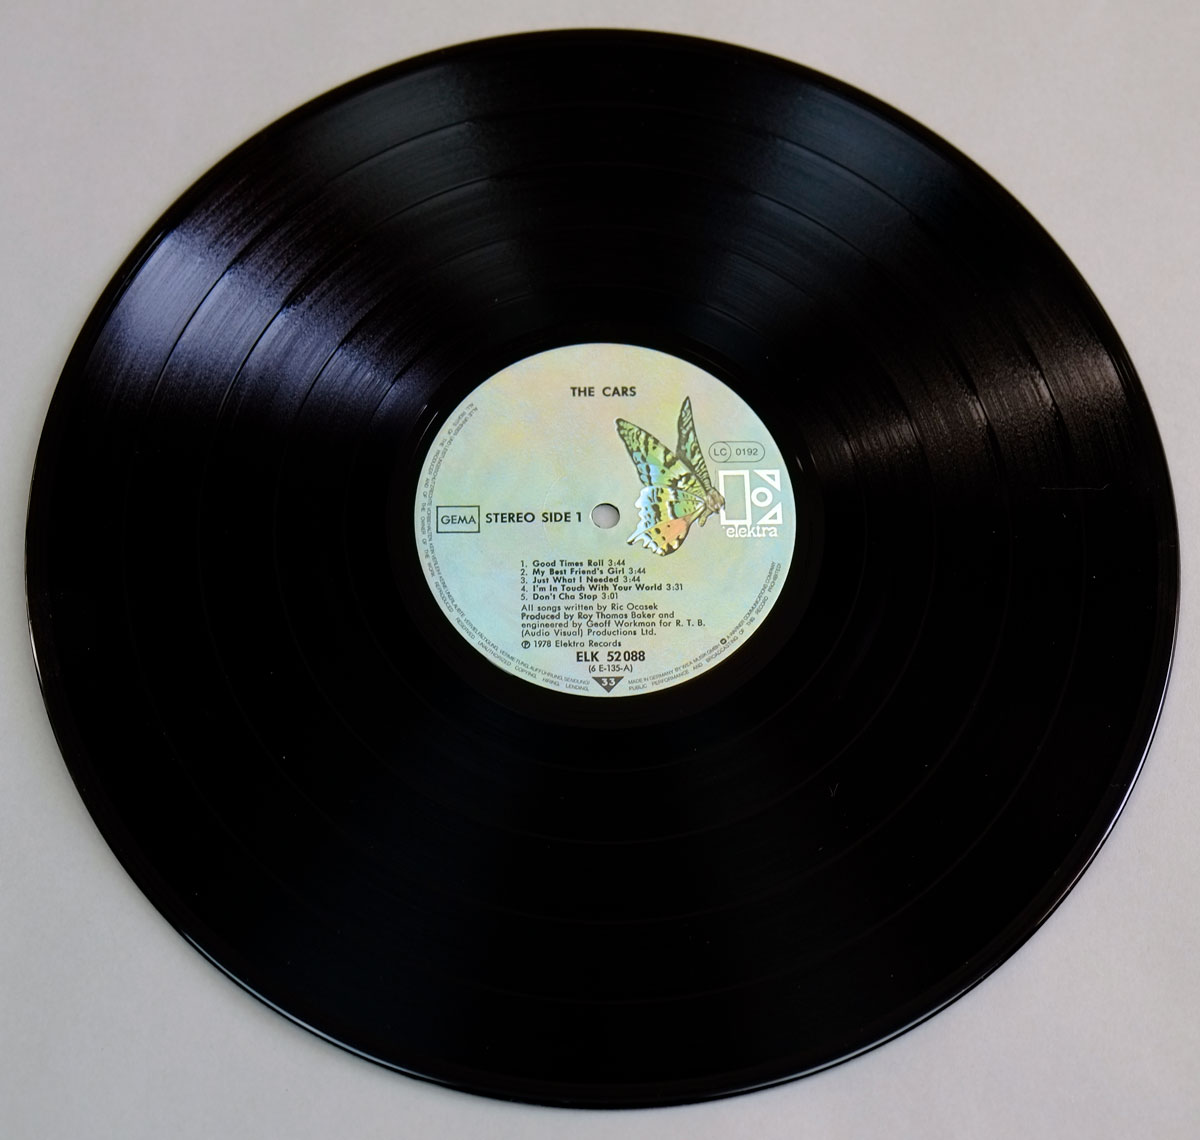 THE CARS SelfTitled eponymous debut studio album 12" LP Vinyl Album Gallery vinylrecords